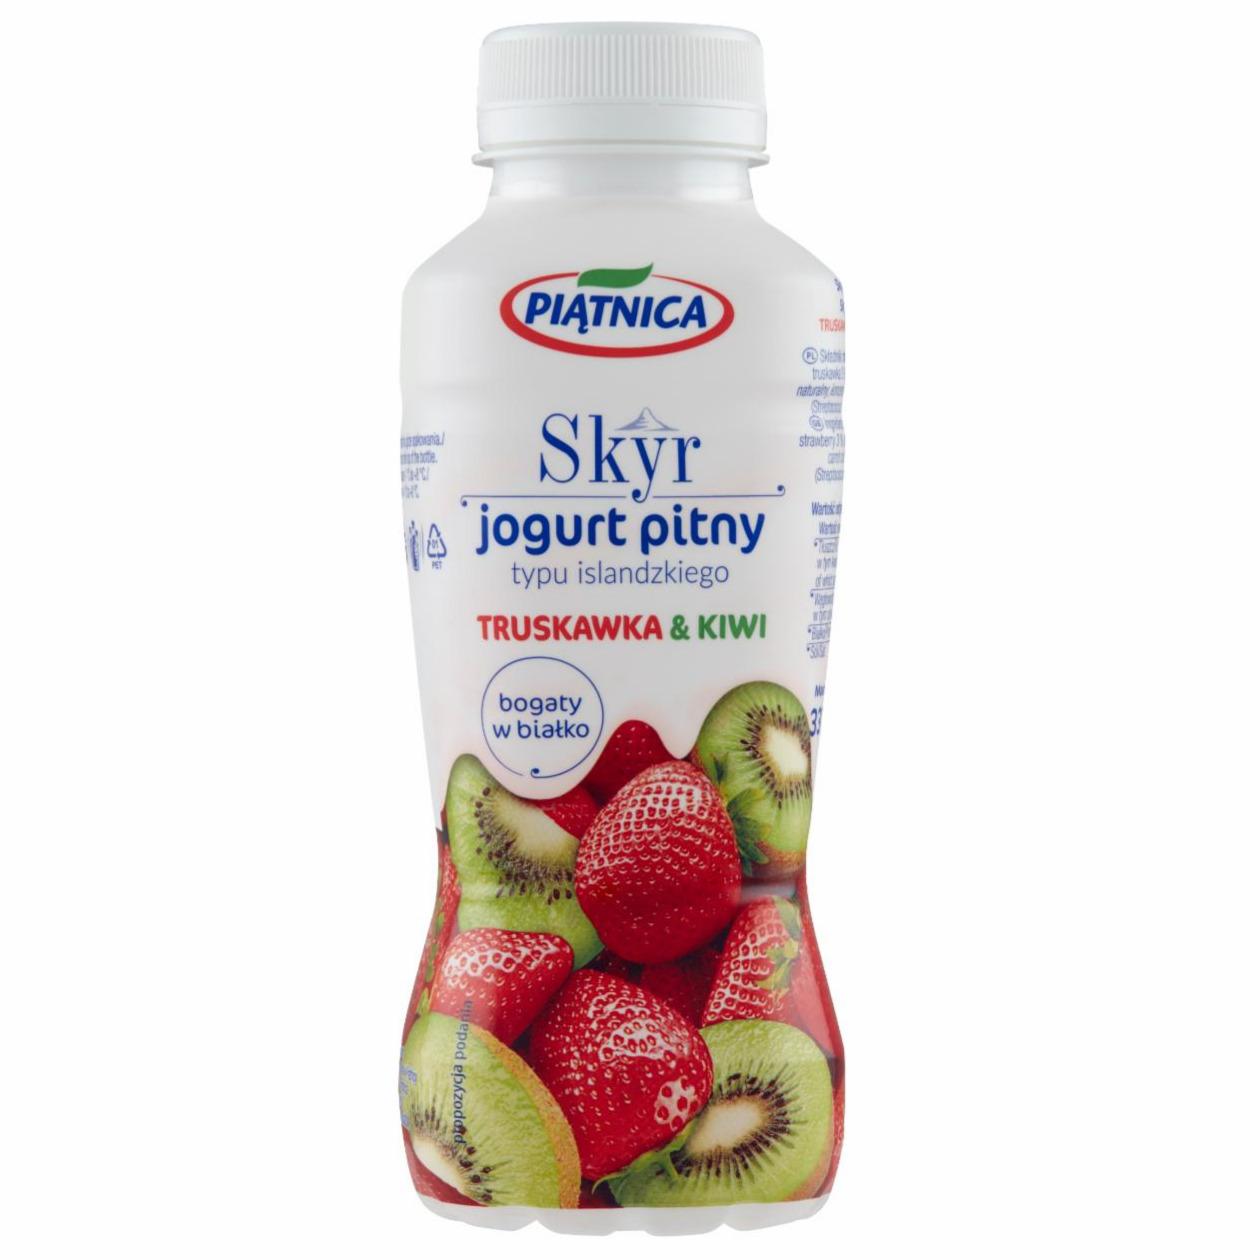 Fotografie - Skyr jogurt pitny truskawka & kiwi Piatnica